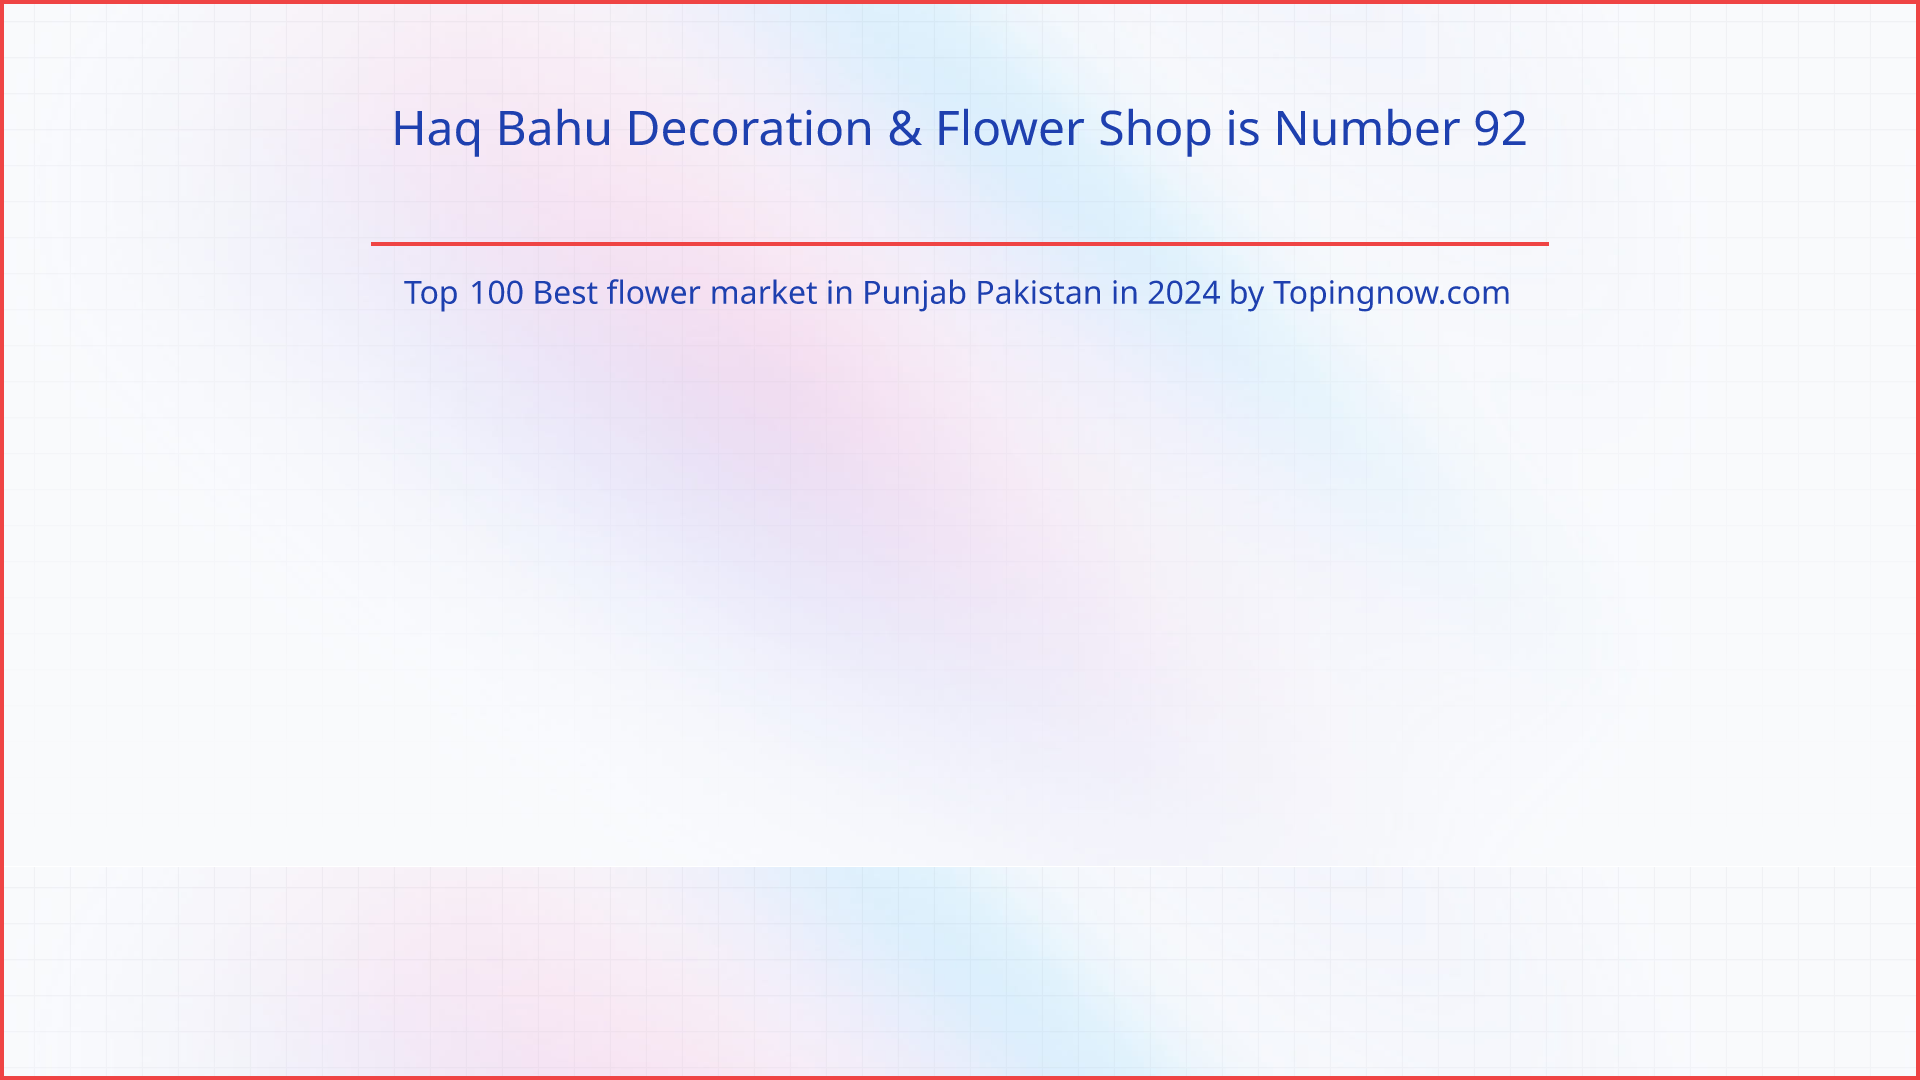 Haq Bahu Decoration & Flower Shop: Top 100 Best flower market in Punjab Pakistan in 2024